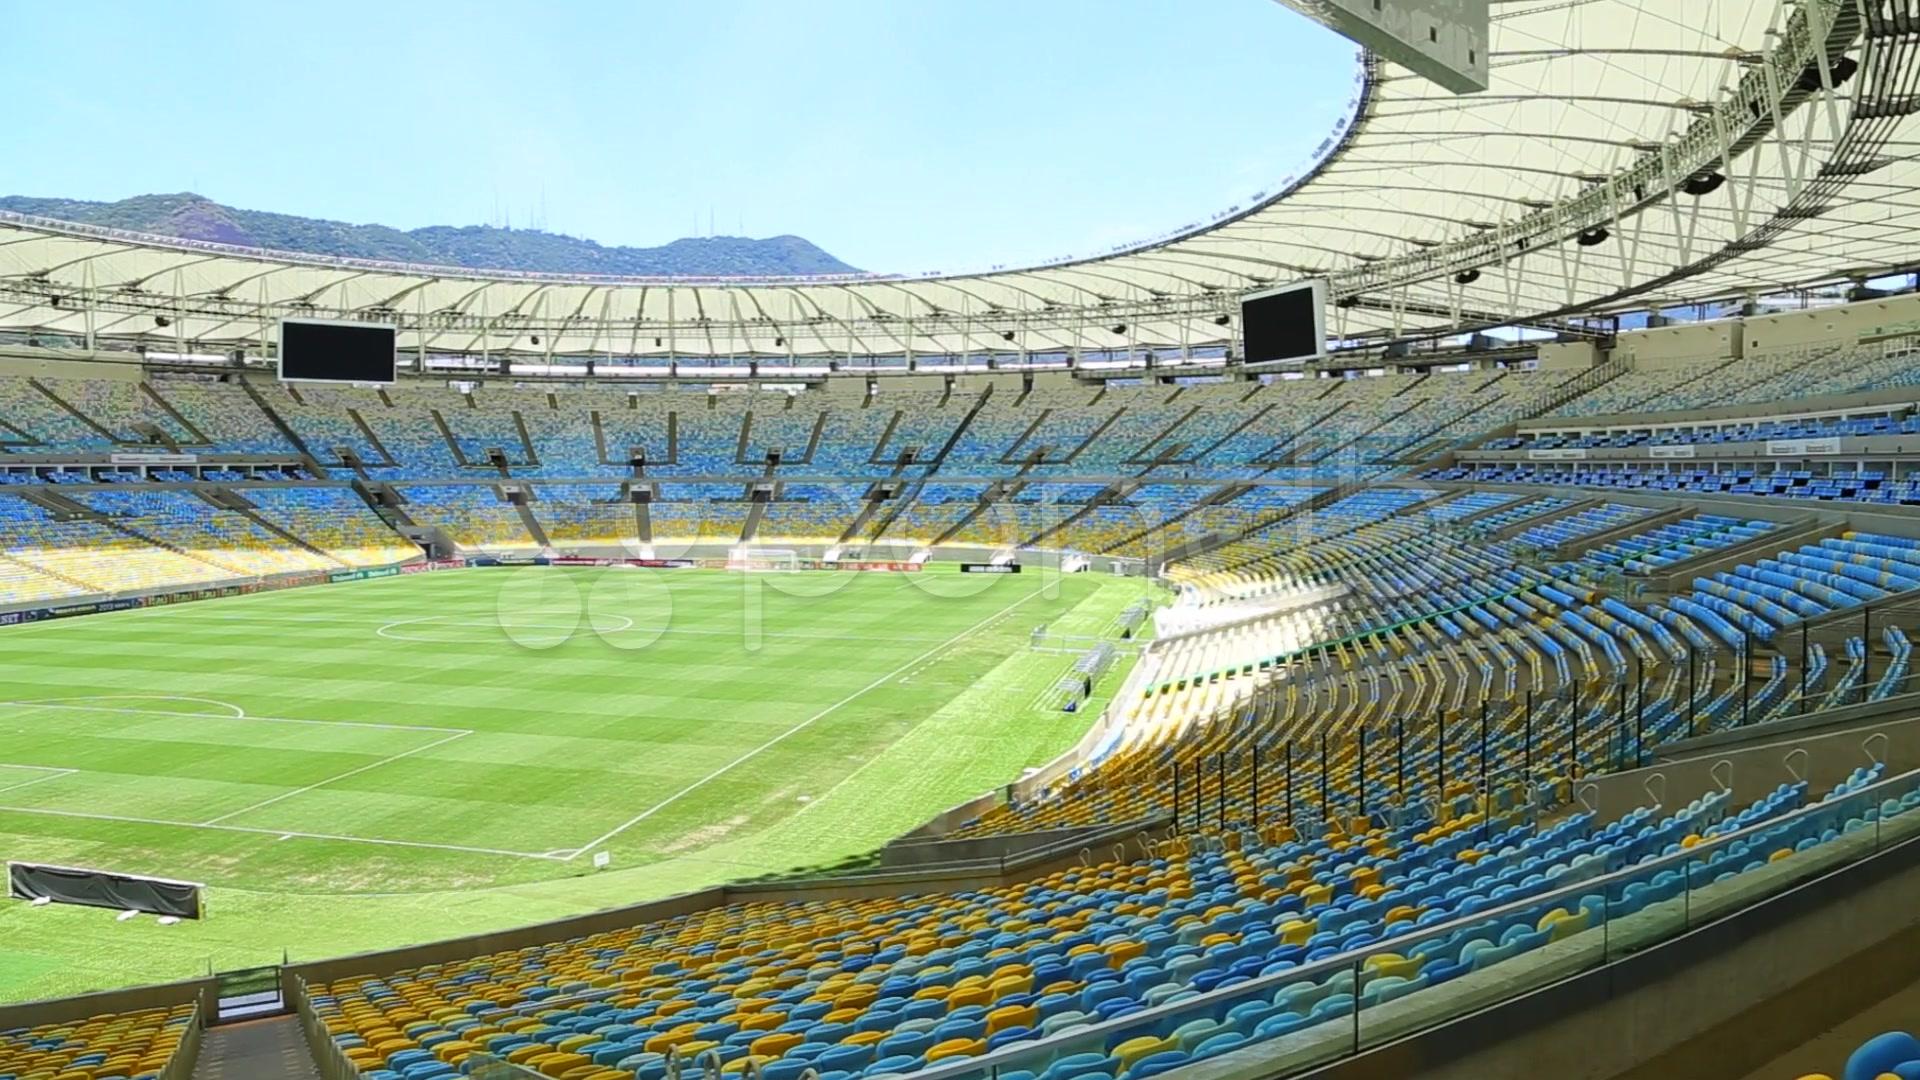 Video: The new Maracana Stadium in Rio de Janeiro, Brazil